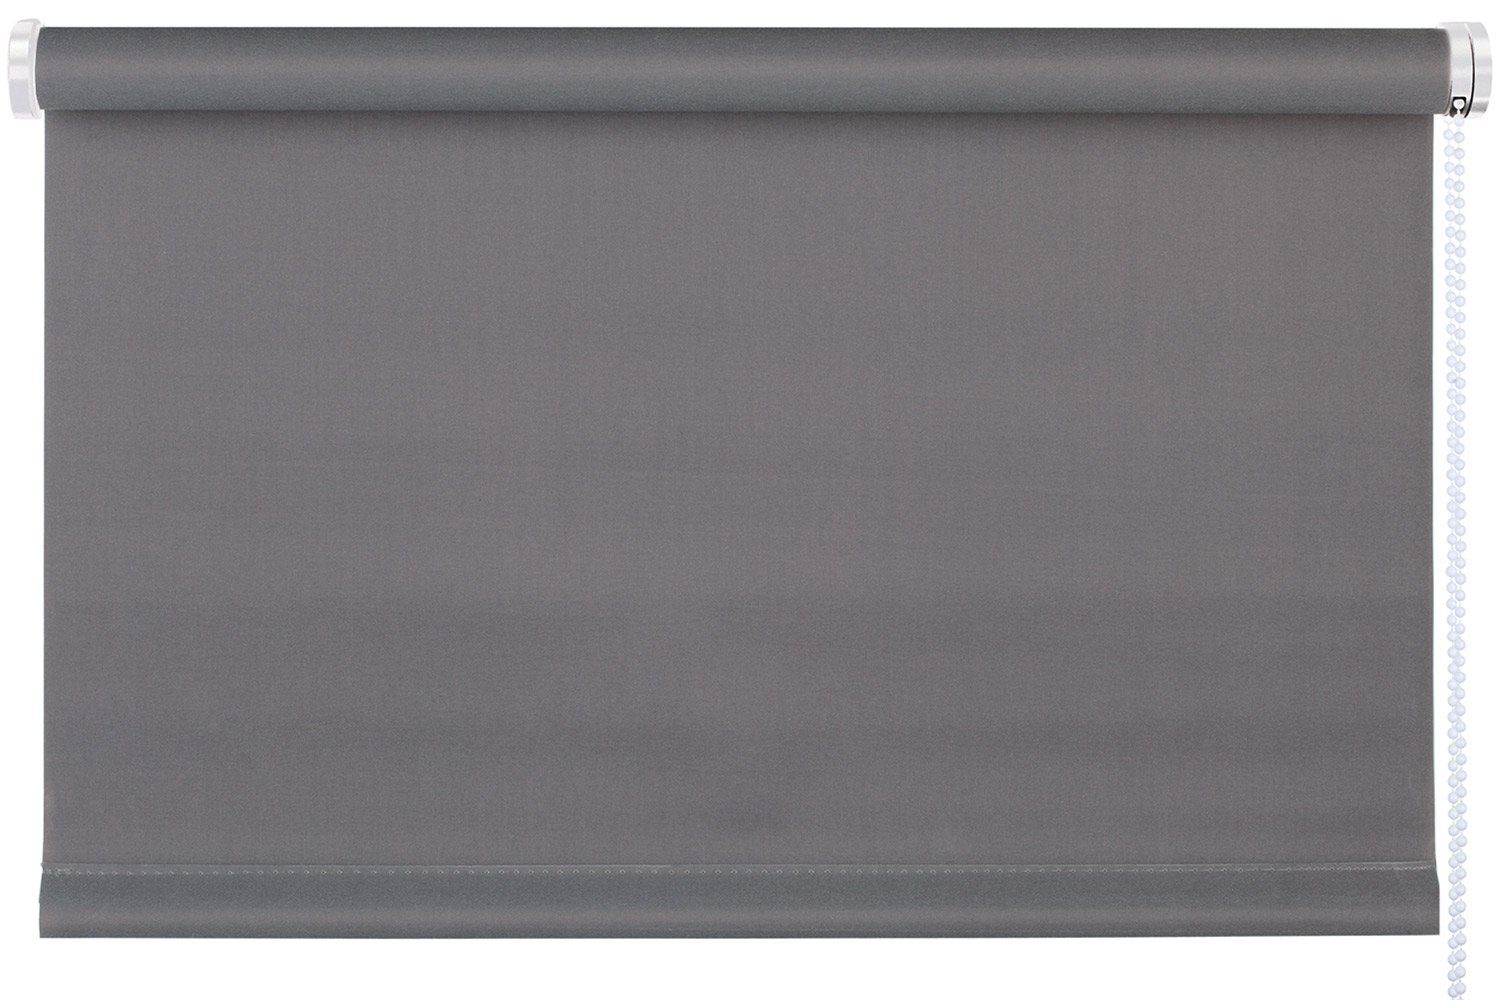 Rollo TREND, Design Rollo, Grau, B 100 x H 150 cm, mydeco, blickdicht, ohne Bohren, Klemmfix | Rollos